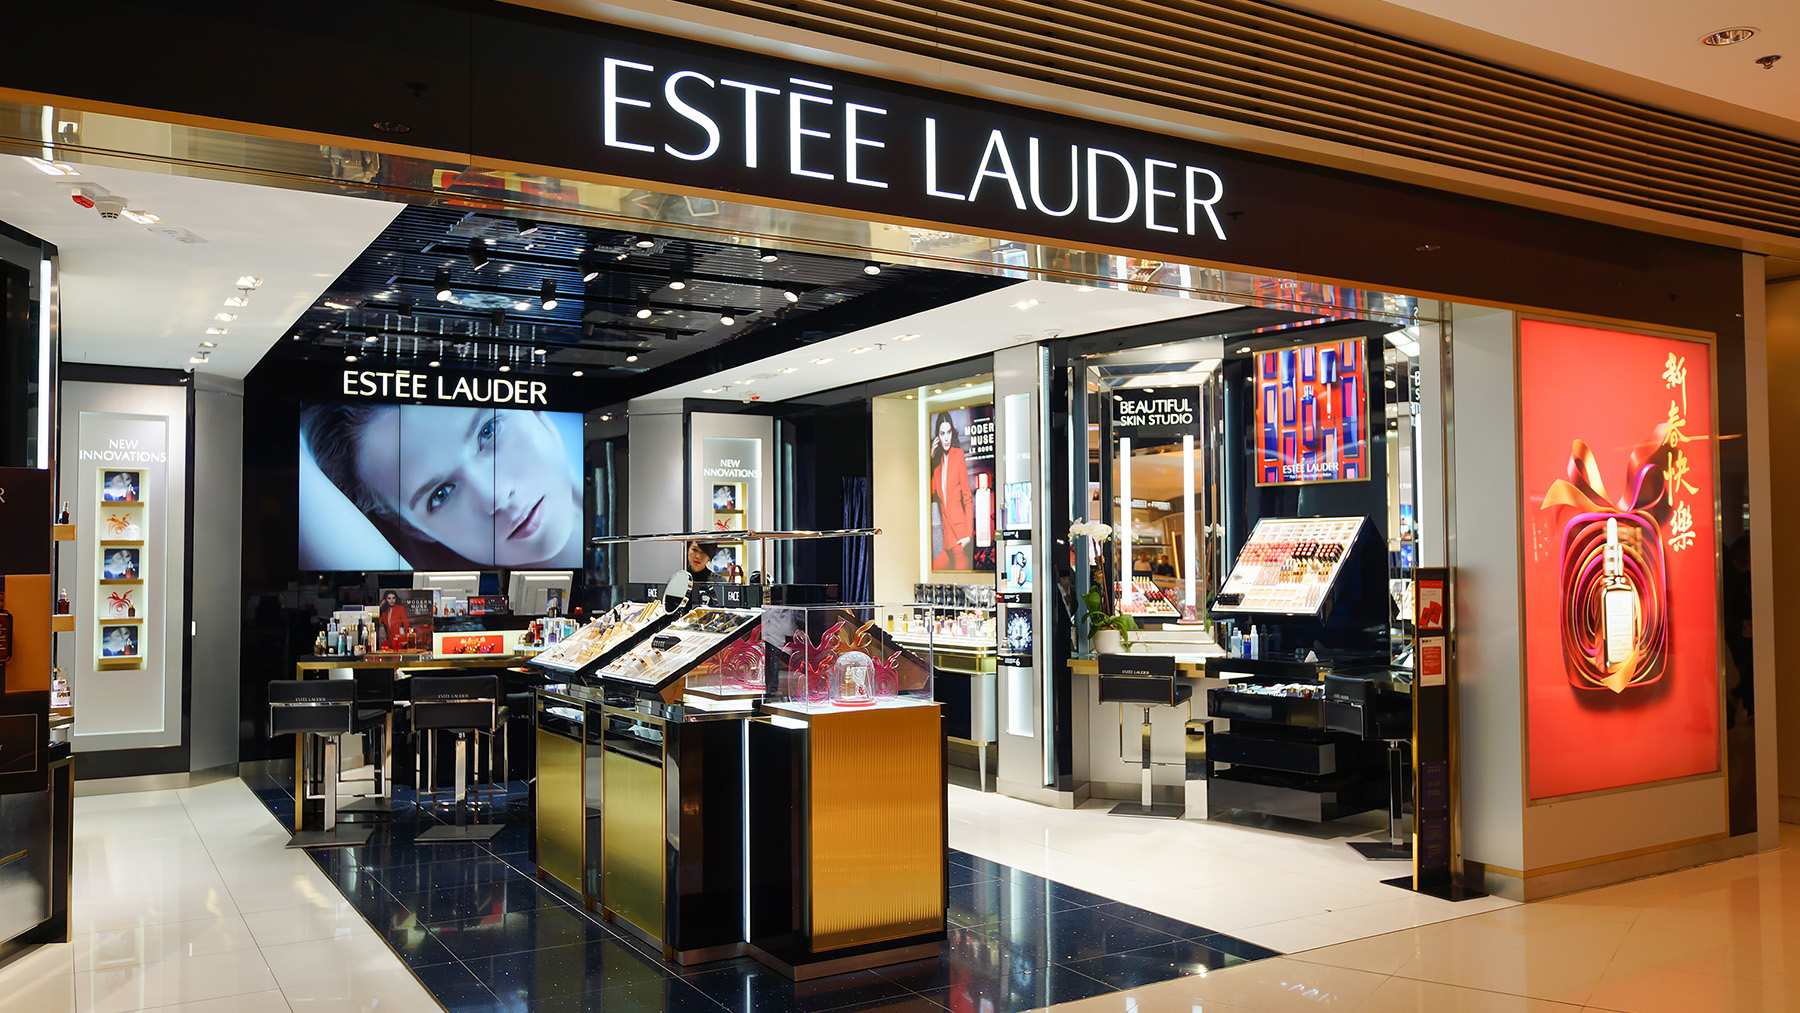 Estée Lauder Is Falling Behind Rivals Like L'Oréal, Even on Its Home Turf